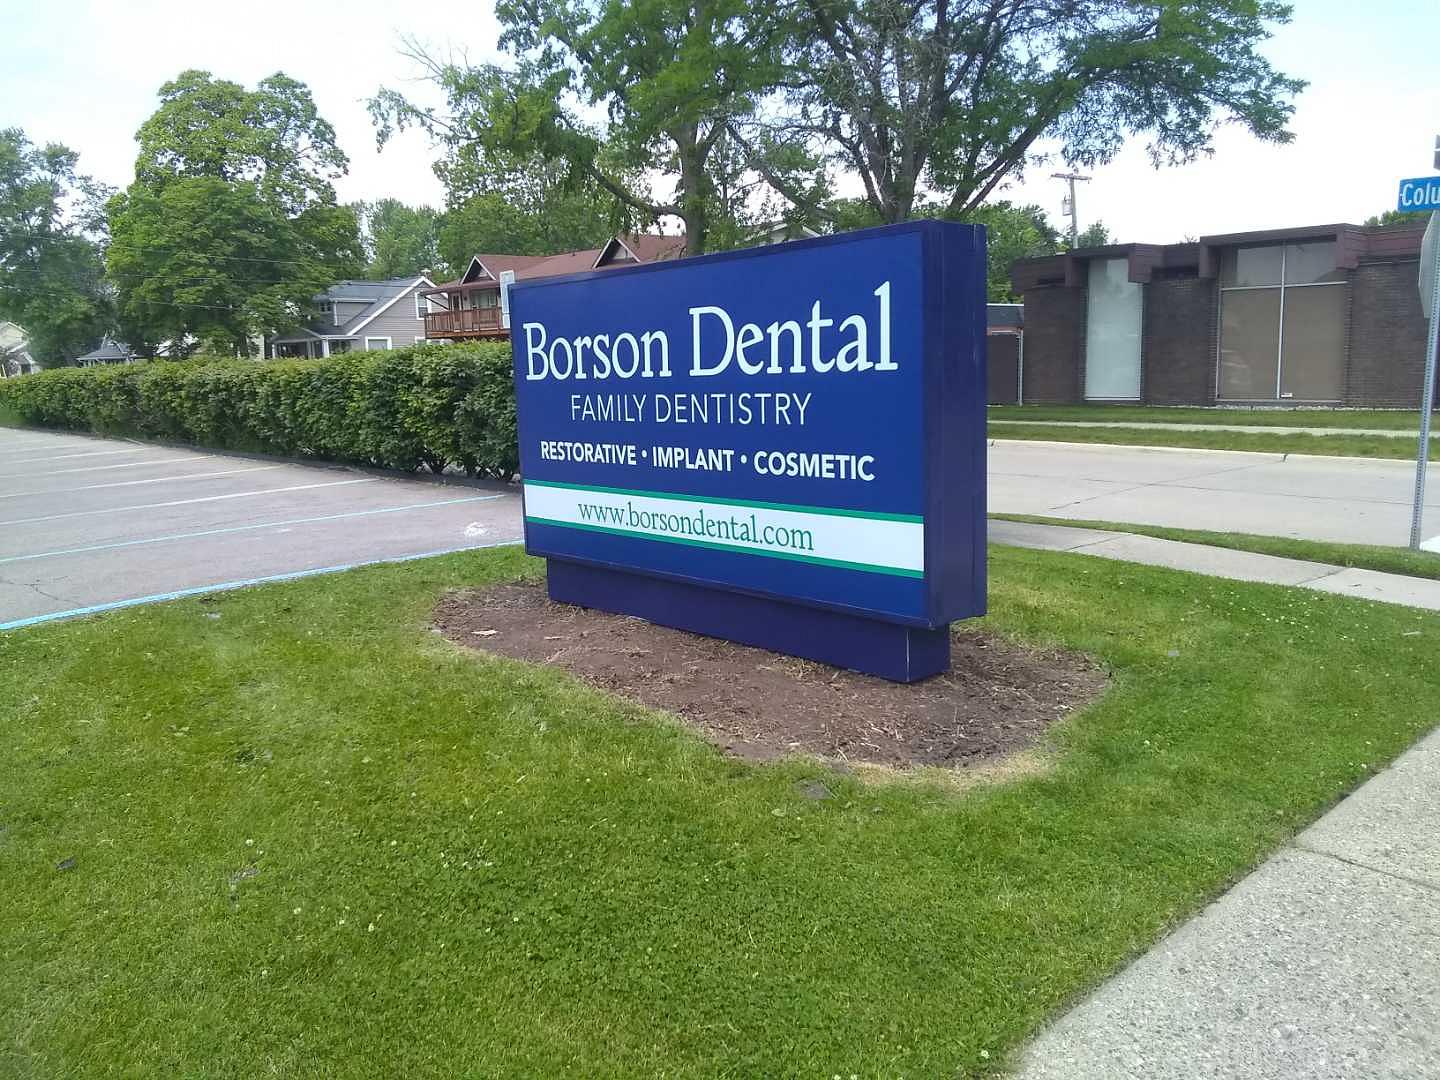 Borson Dental Family Dentistry monument sign illuminating flex face